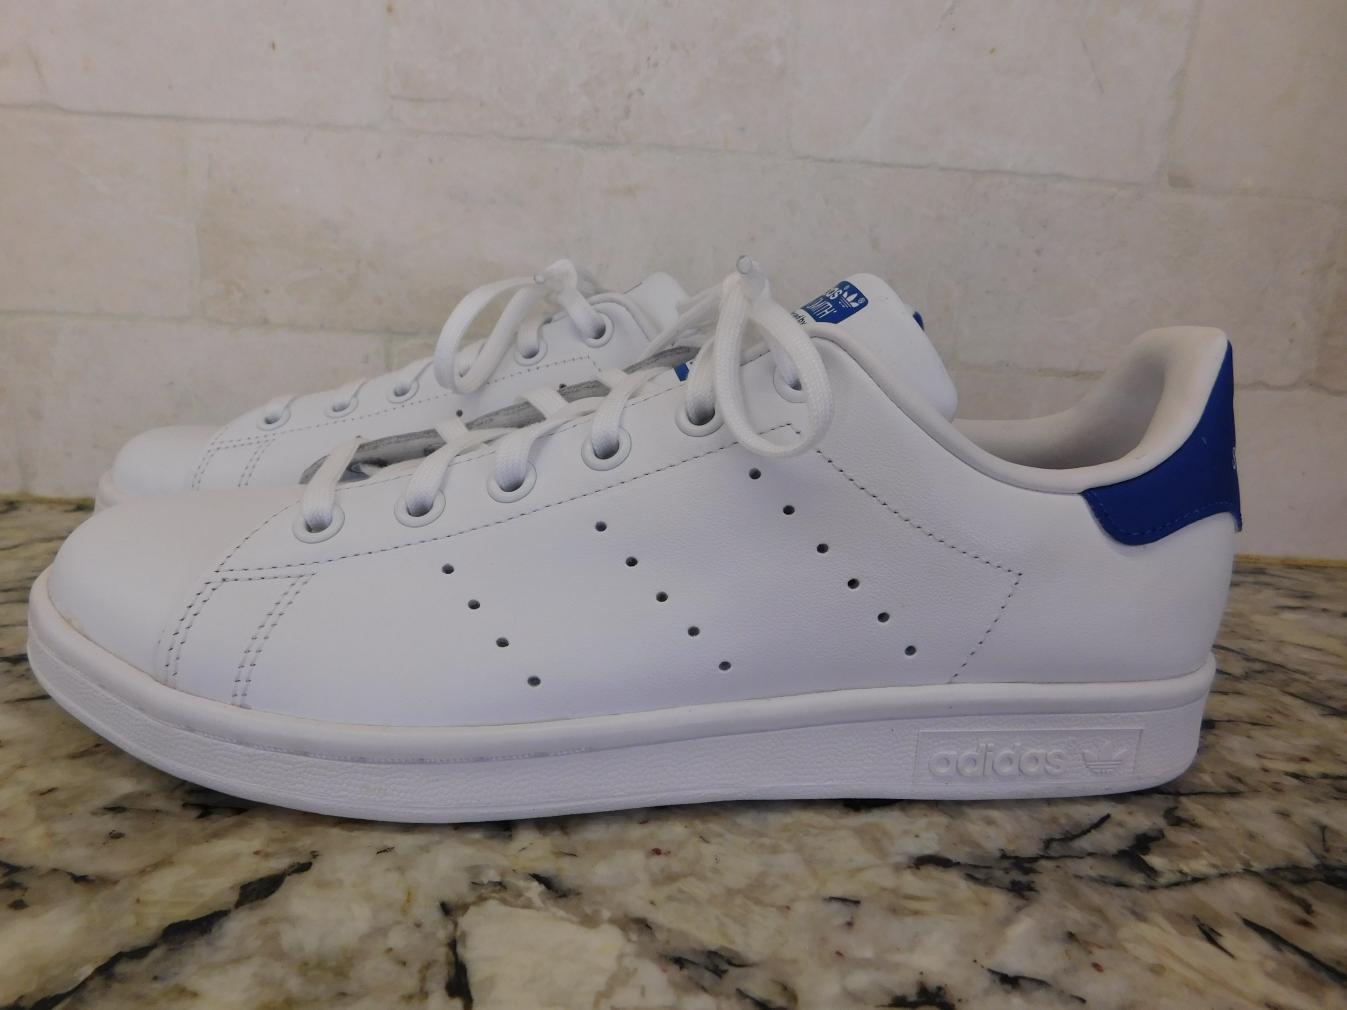 JCrew: Adidas® Stan Smith™ sneakers $80 White/Dark Navy 7 M1618 | eBay